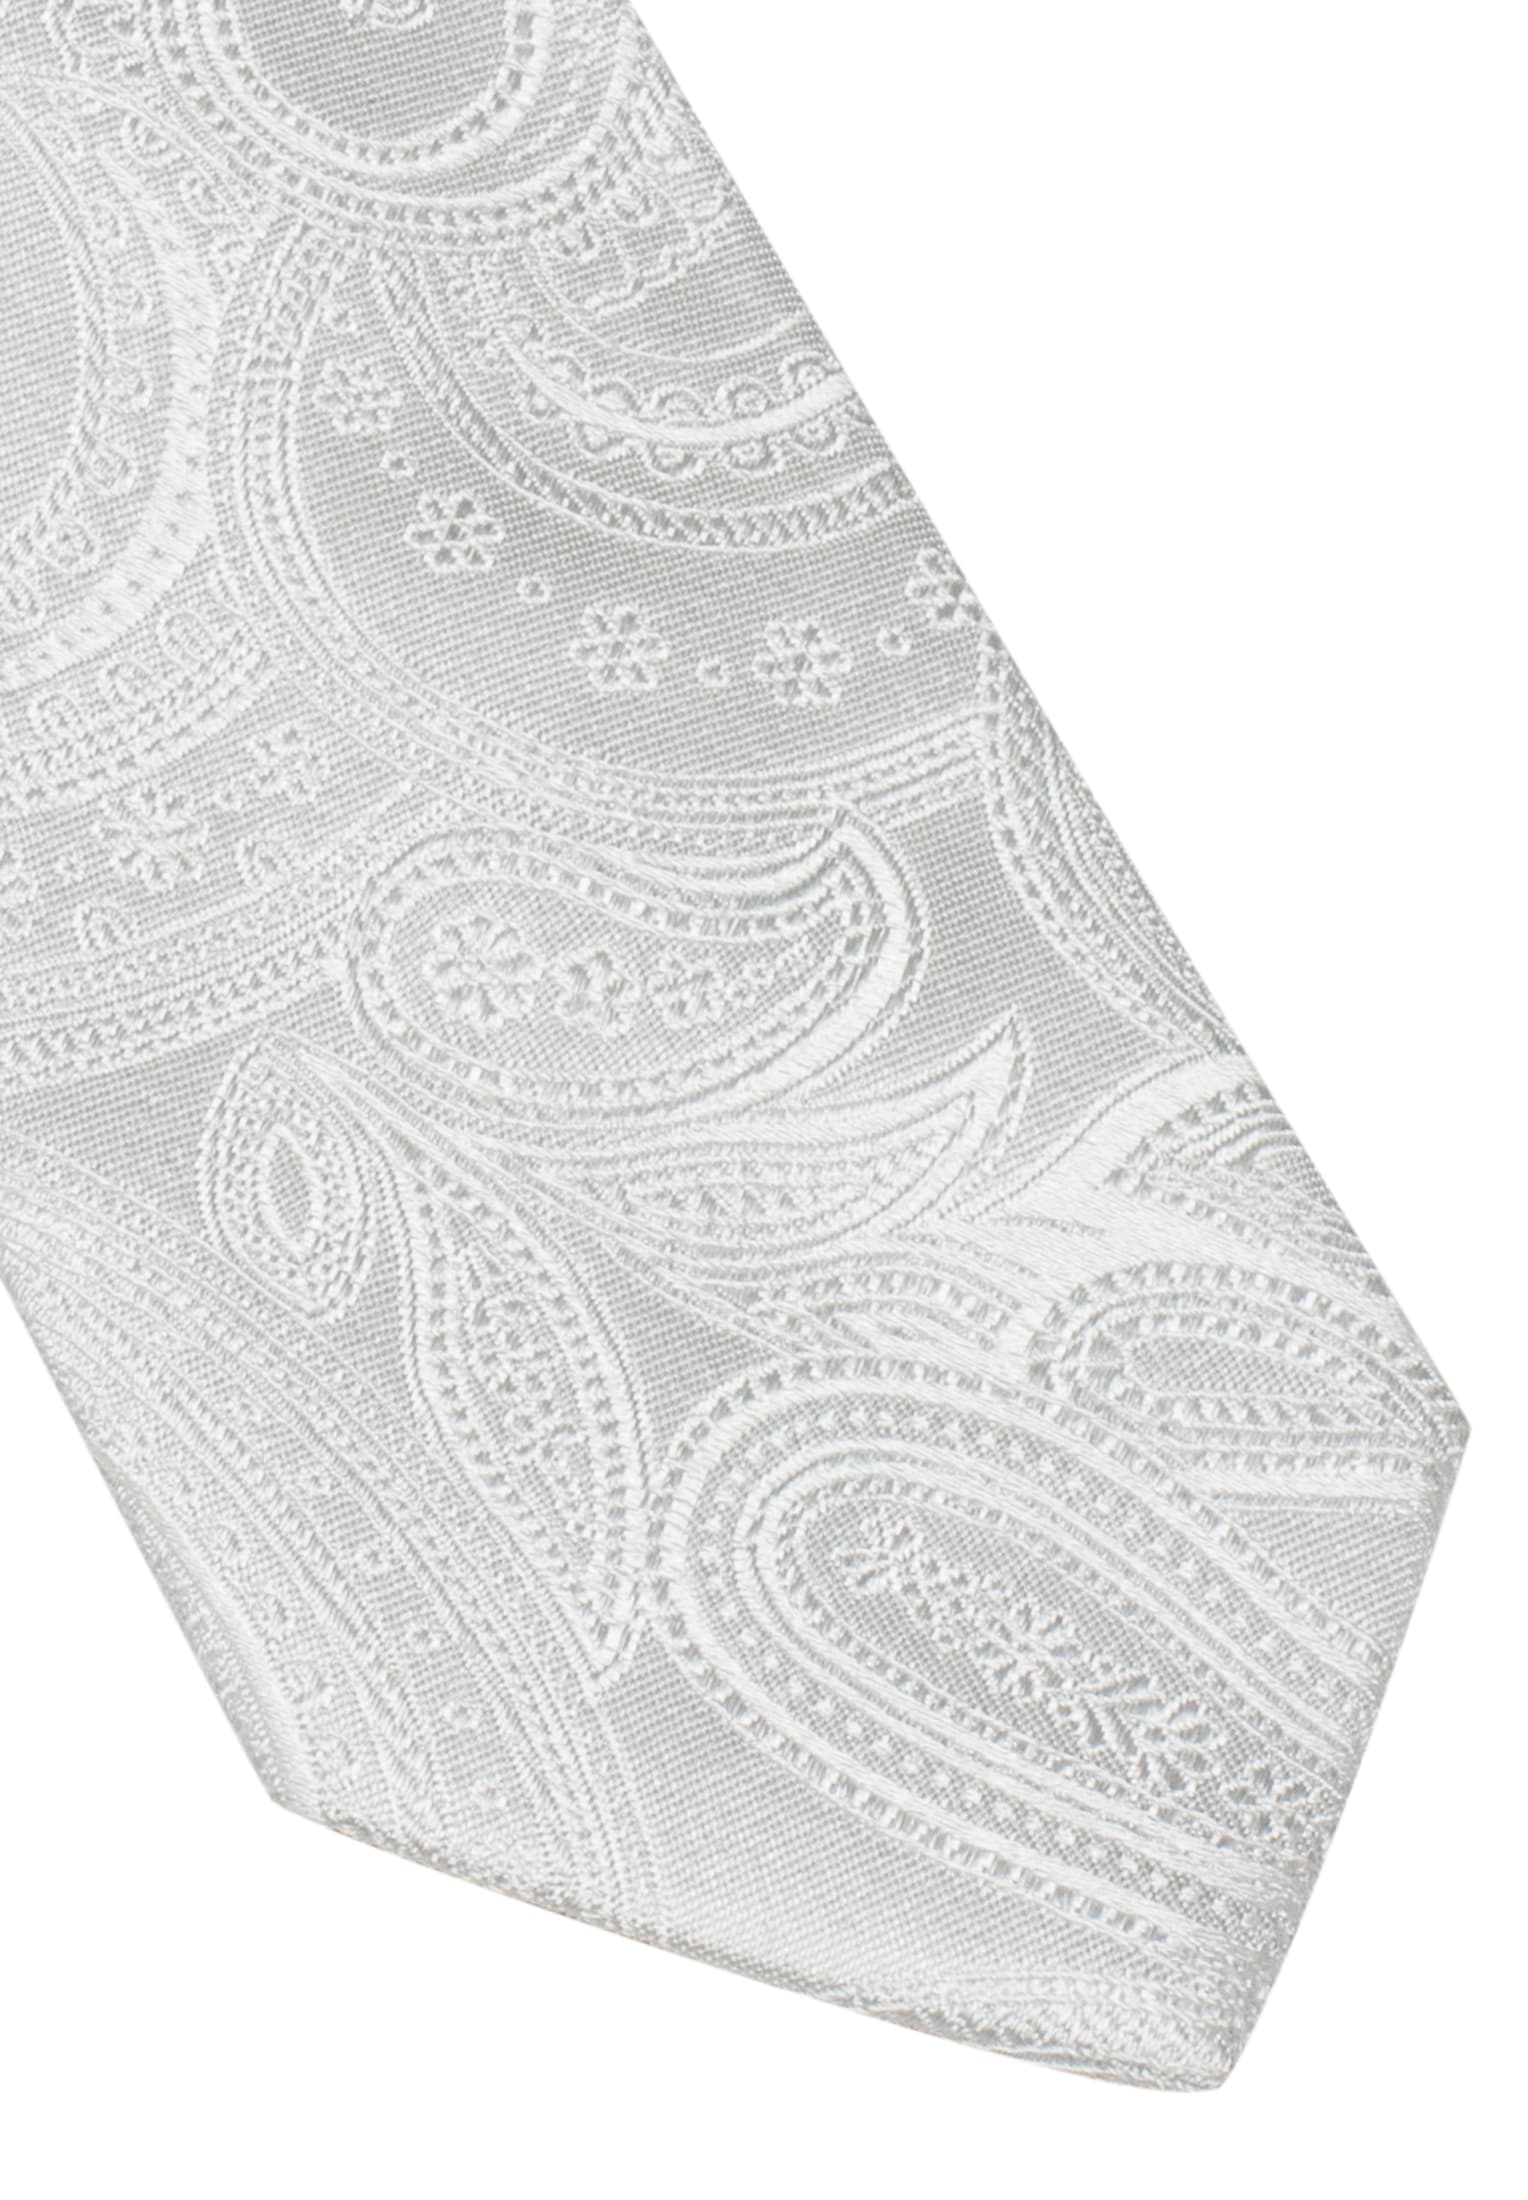 Krawatte in silber gemustert | 160 silber 1AC01869-03-11-160 | 